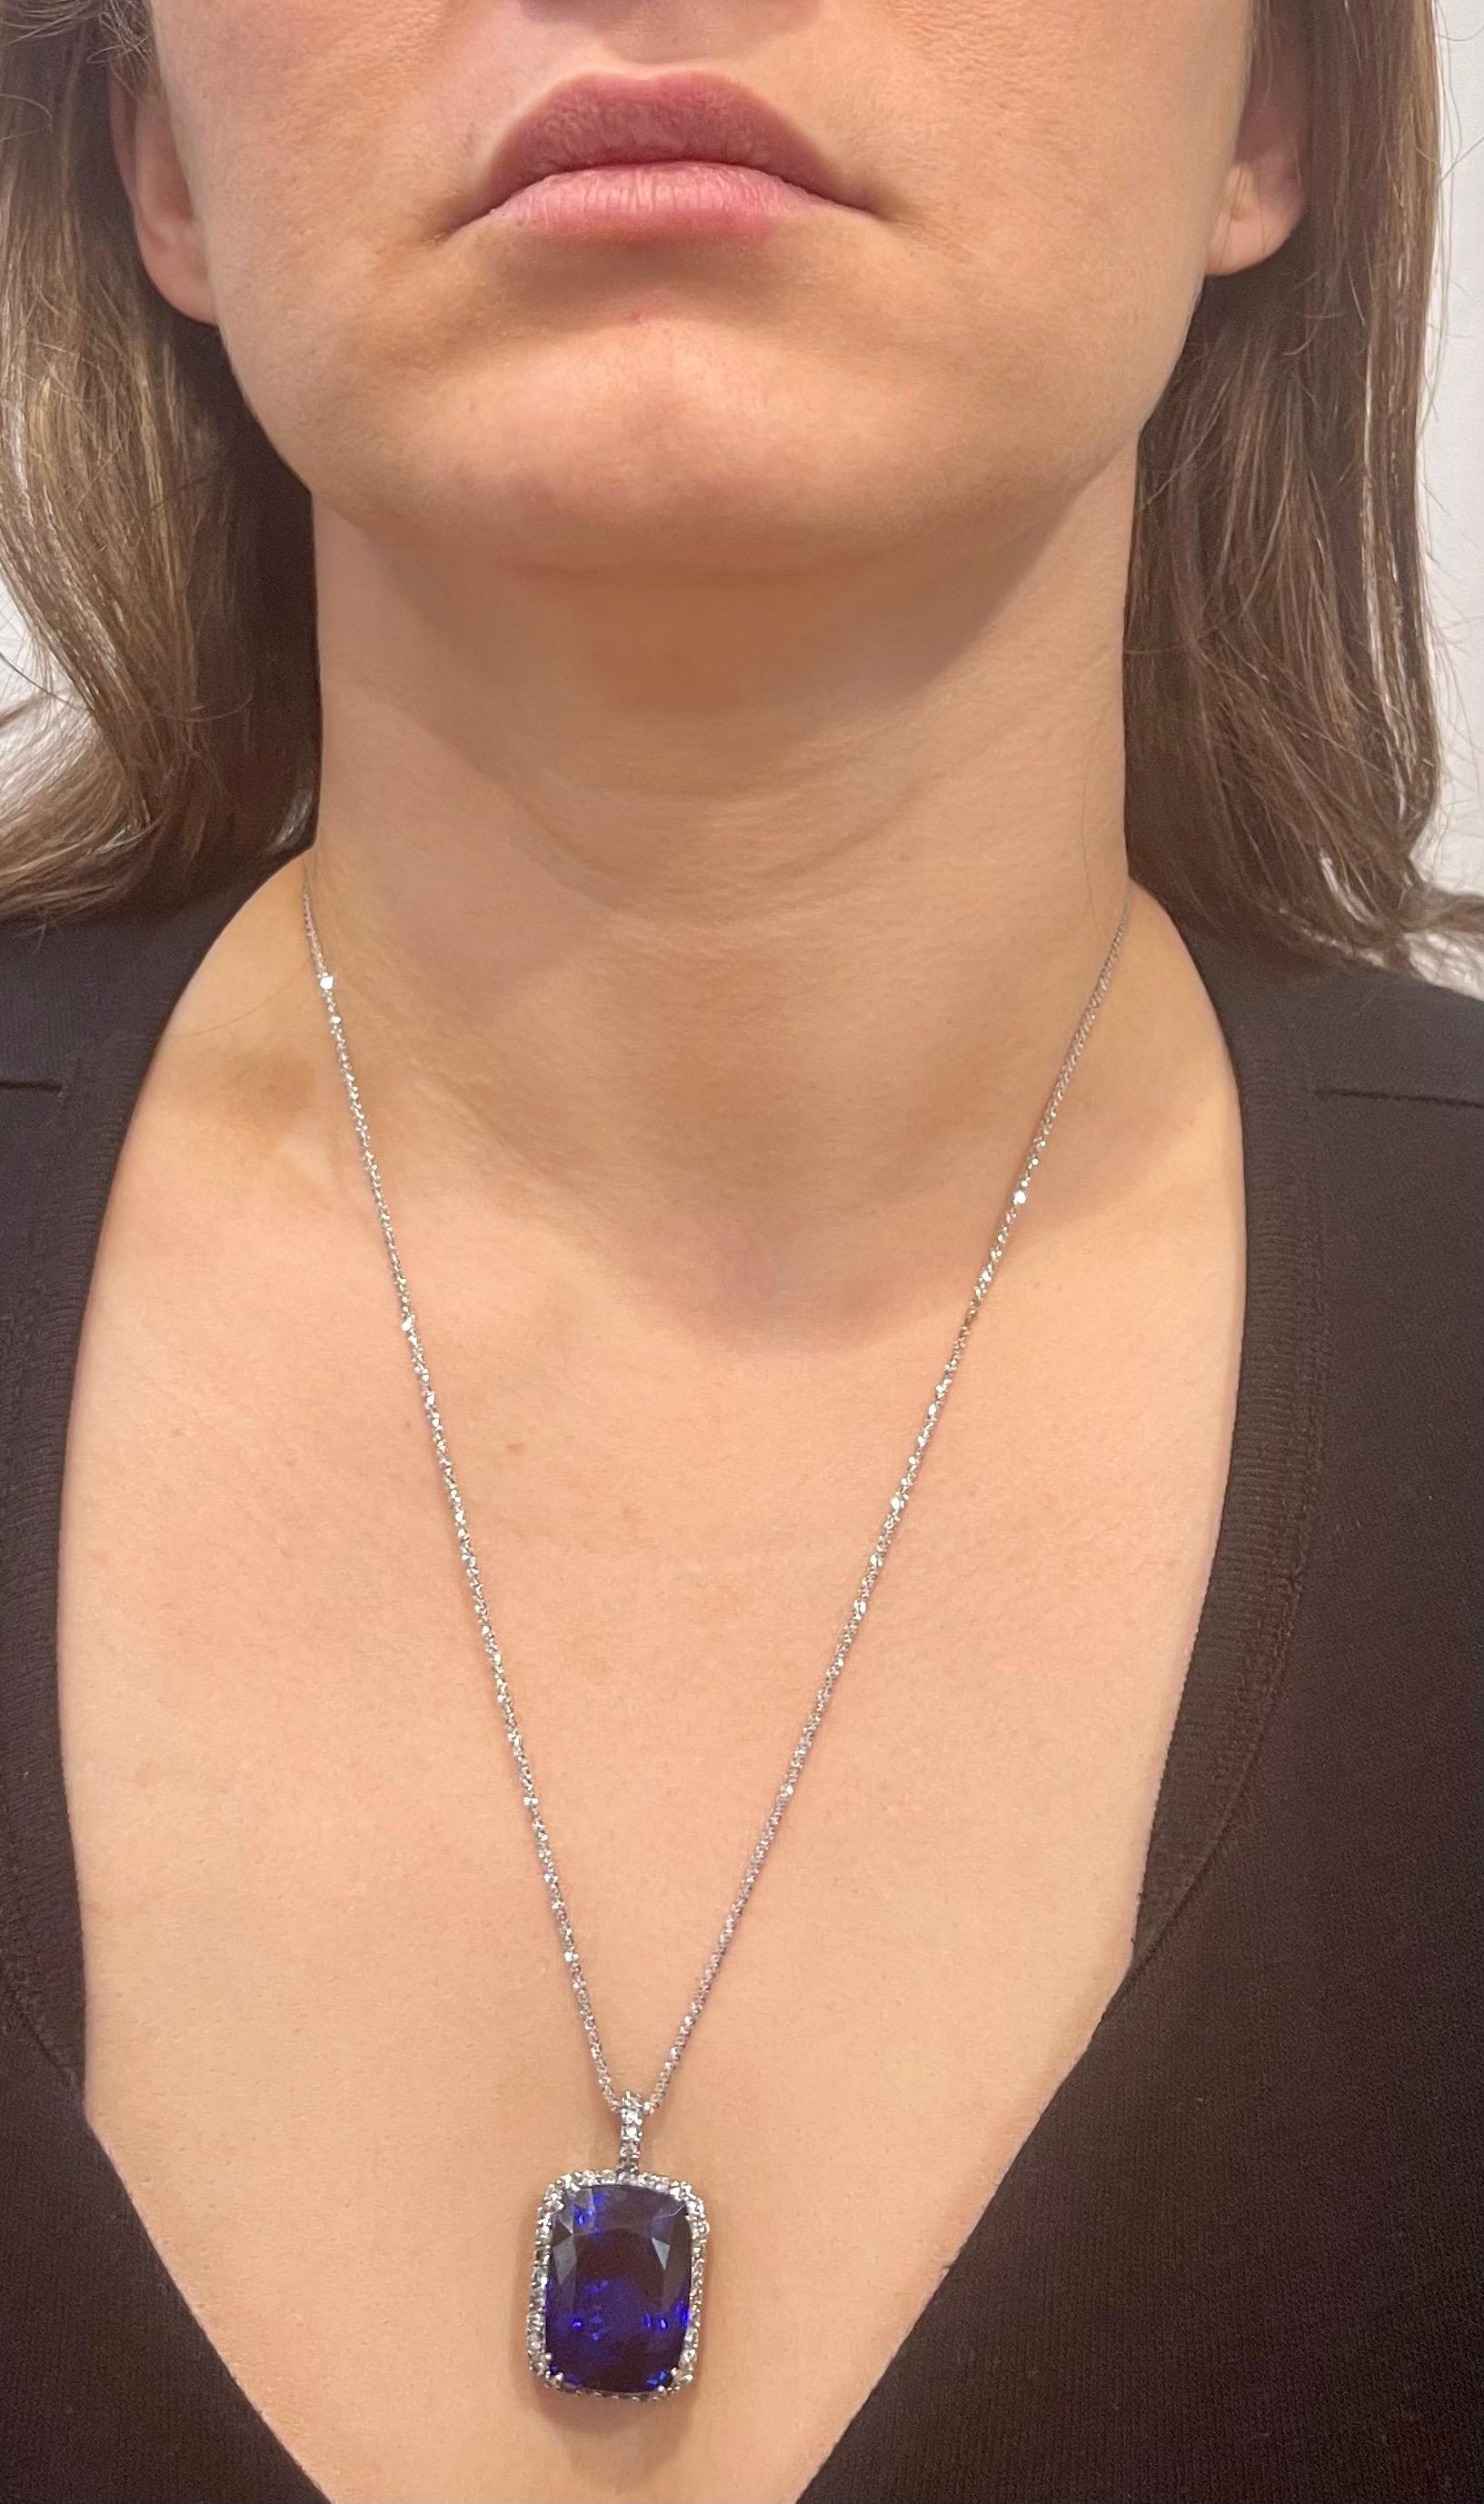 37.5 Carat Tanzanite Necklace & Diamond Pendant with Chain 14 Karat White Gold For Sale 3